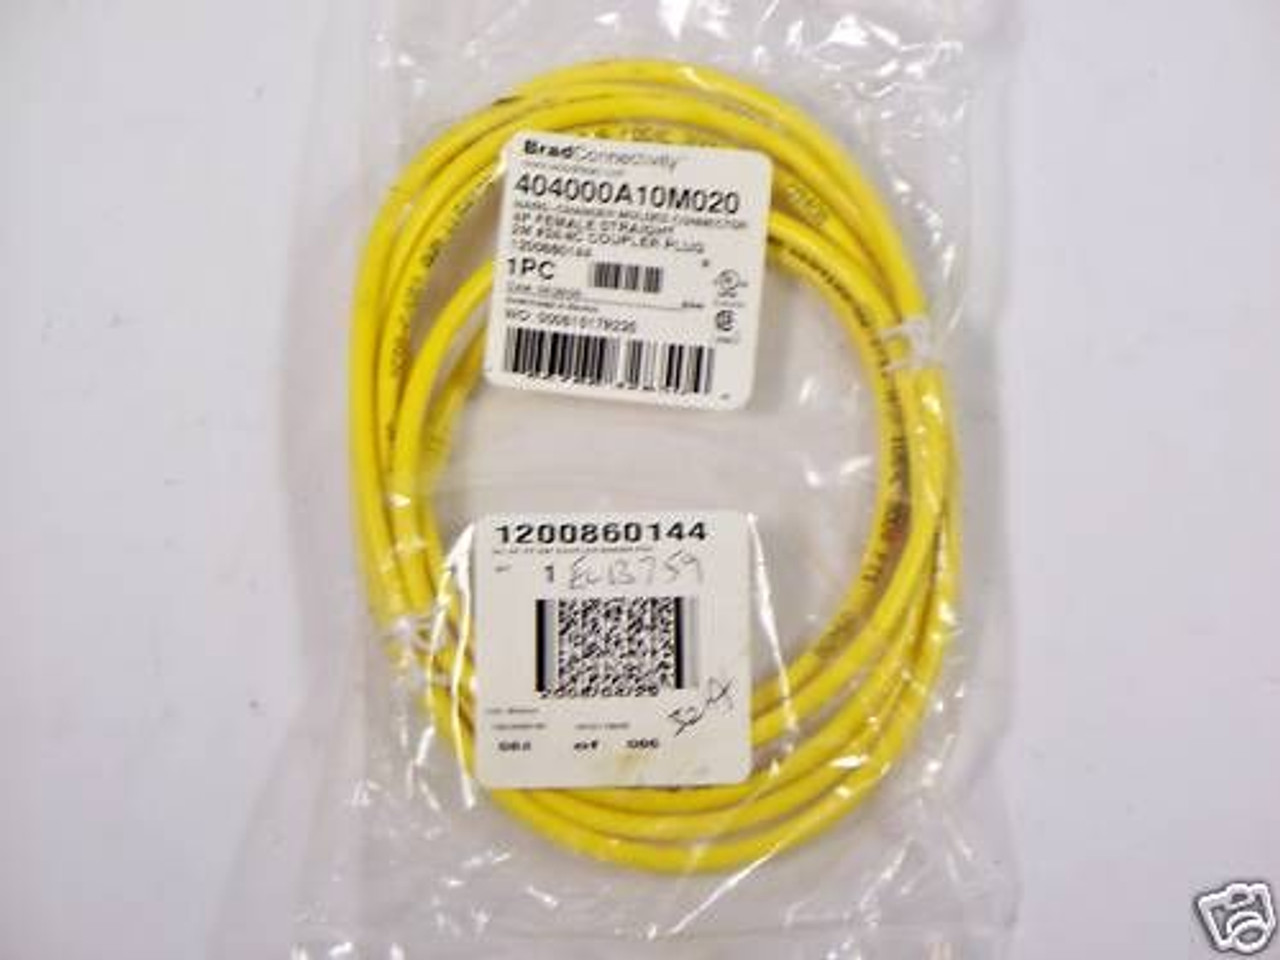 BRAD HARRISON 404000A10M020 2M Cable ! NEW !